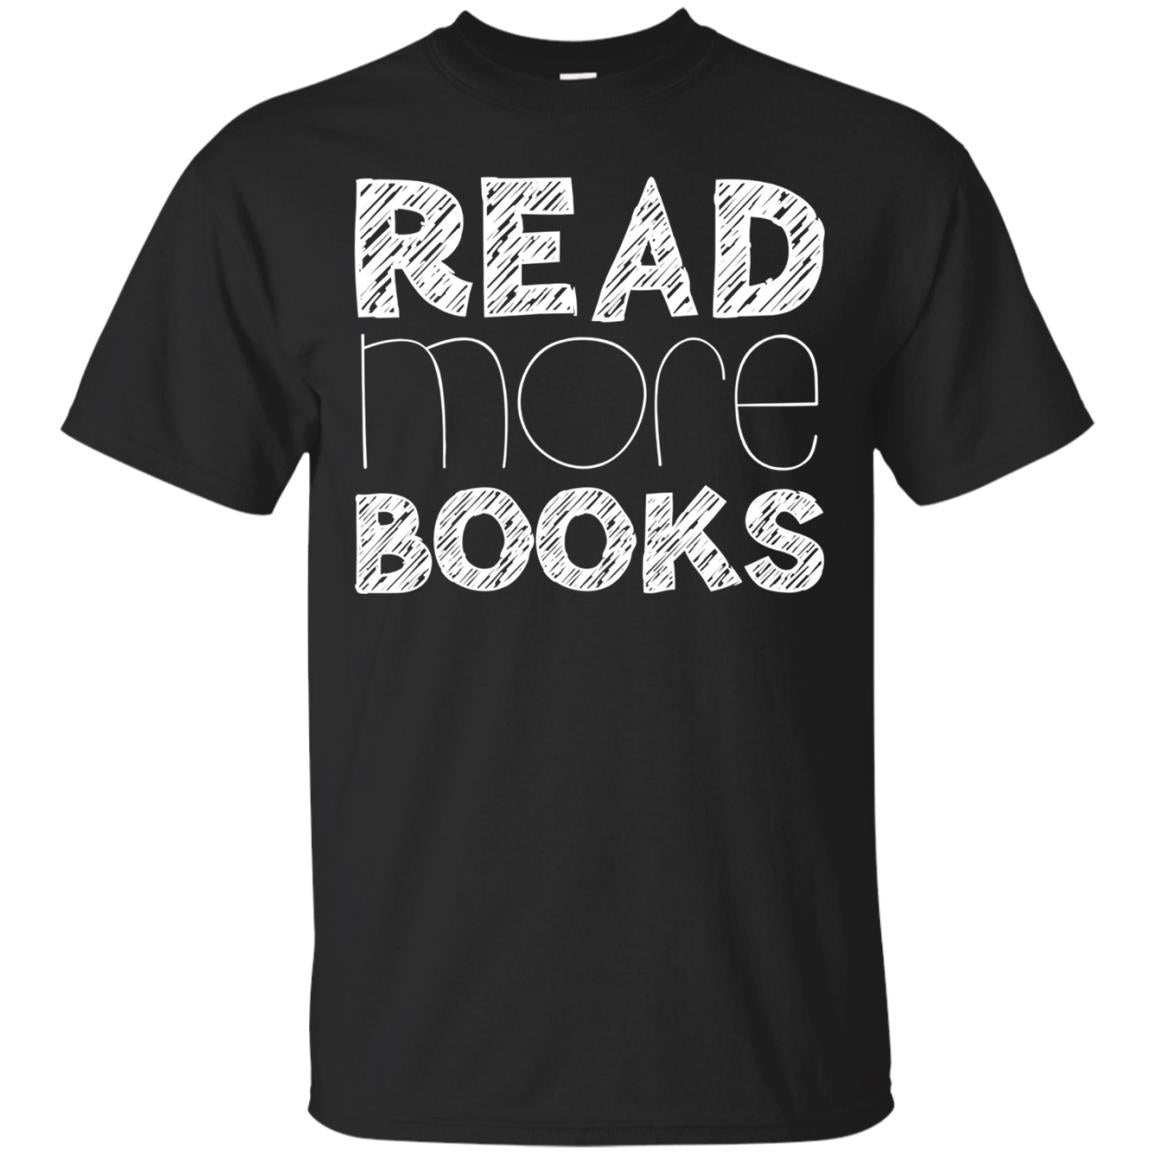 Read More Books T-shirt Funny English Tea Gift